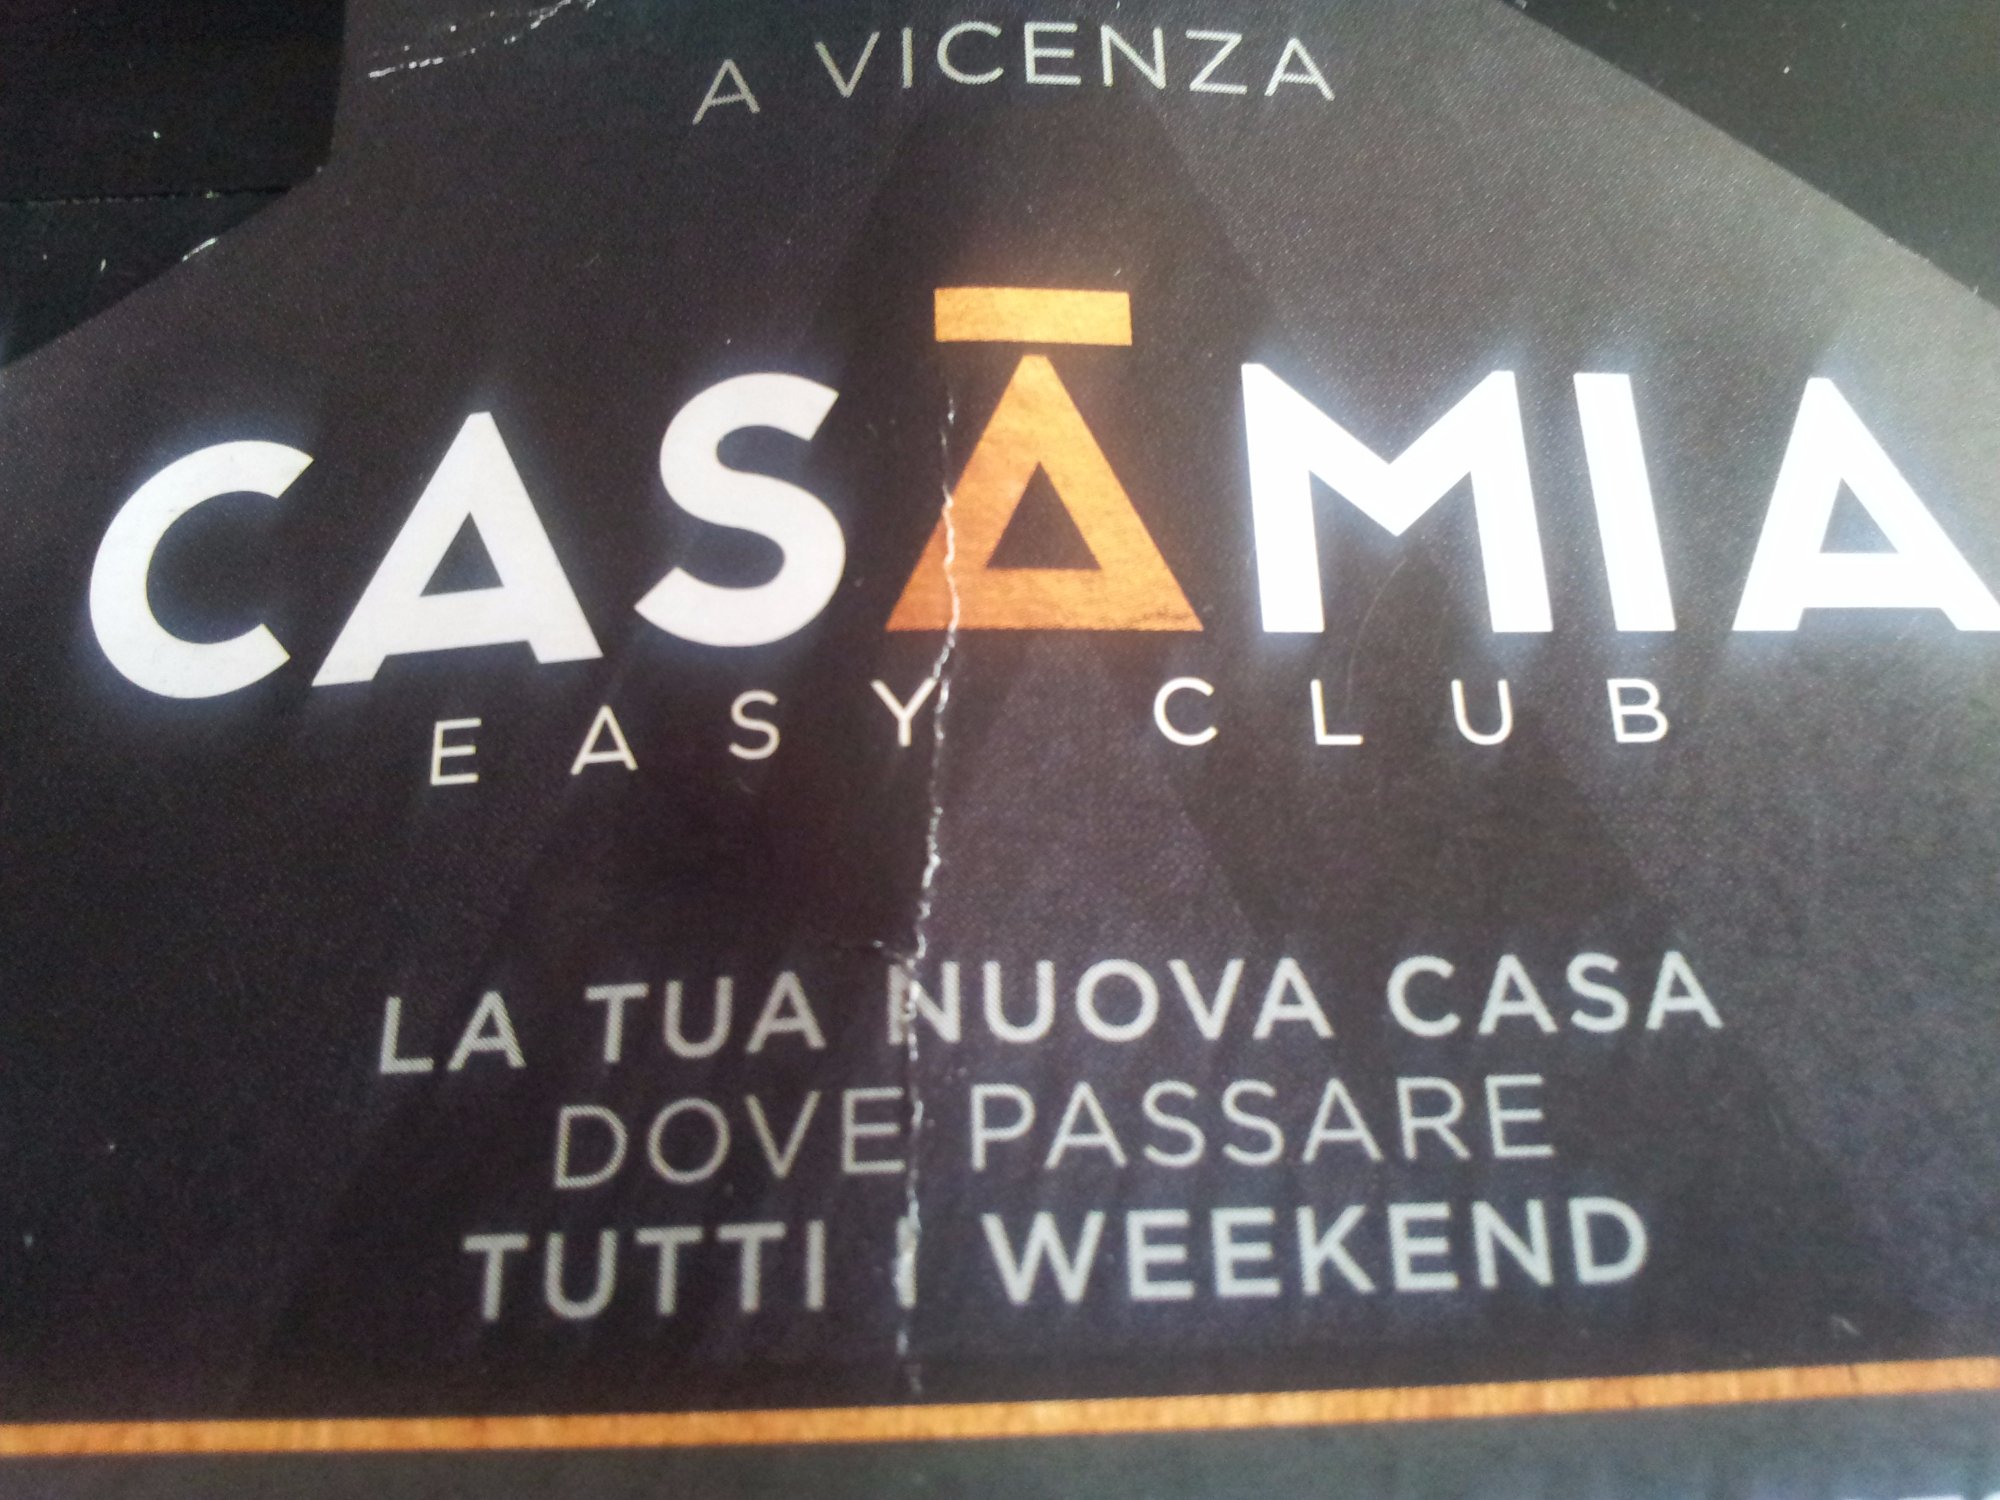 Casamia - Easy Club